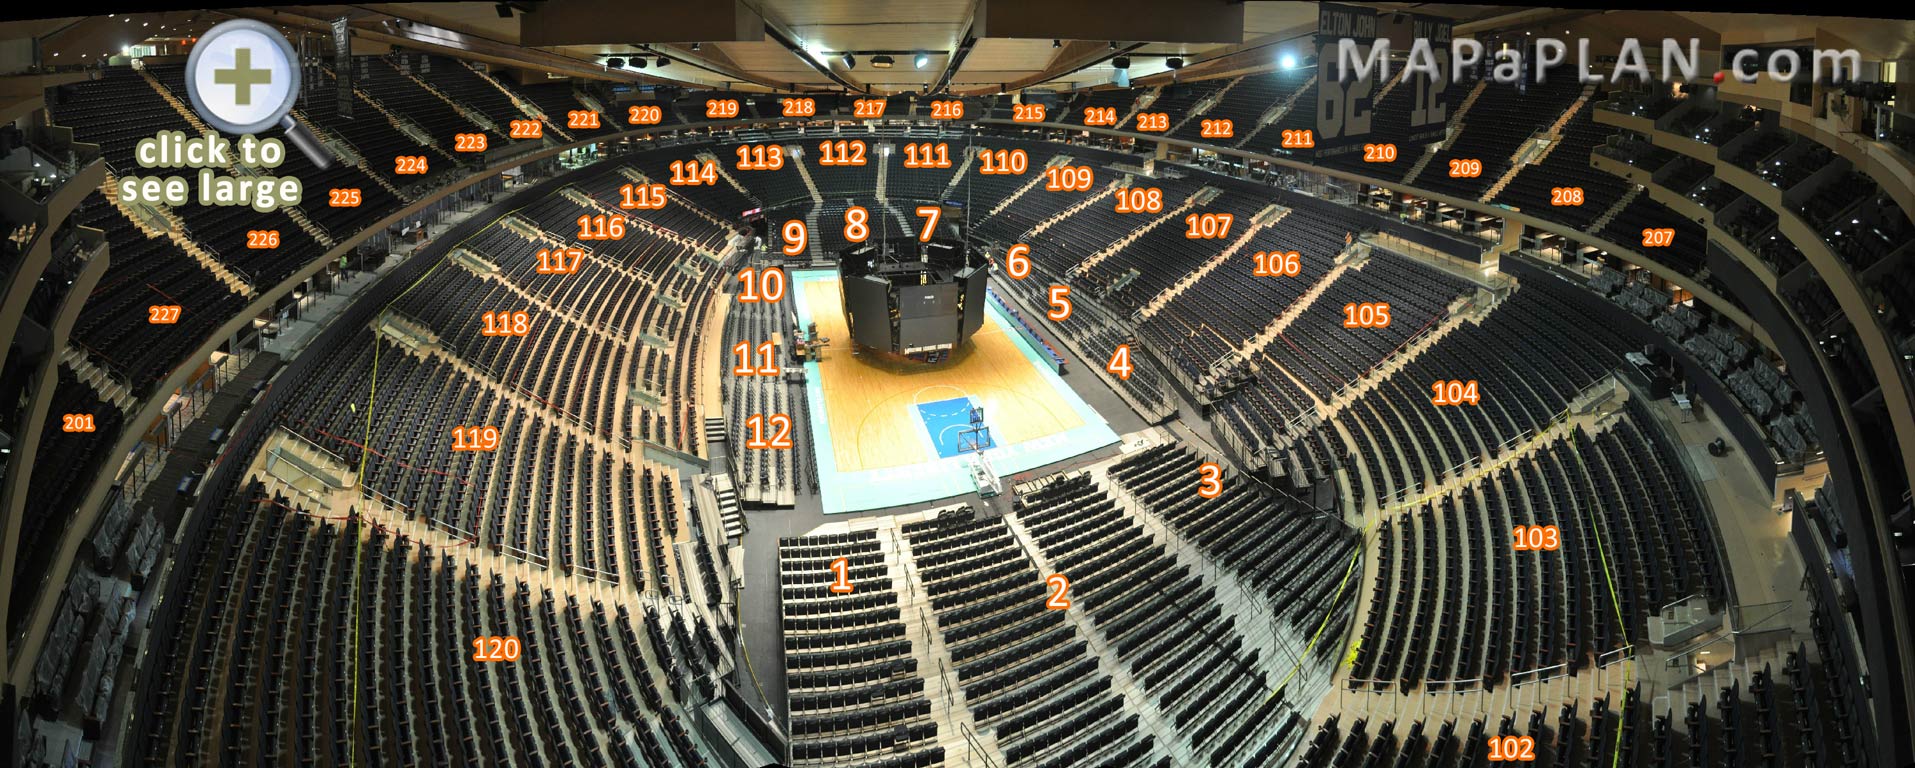 Madison Square Garden Virtual Seating Chart 